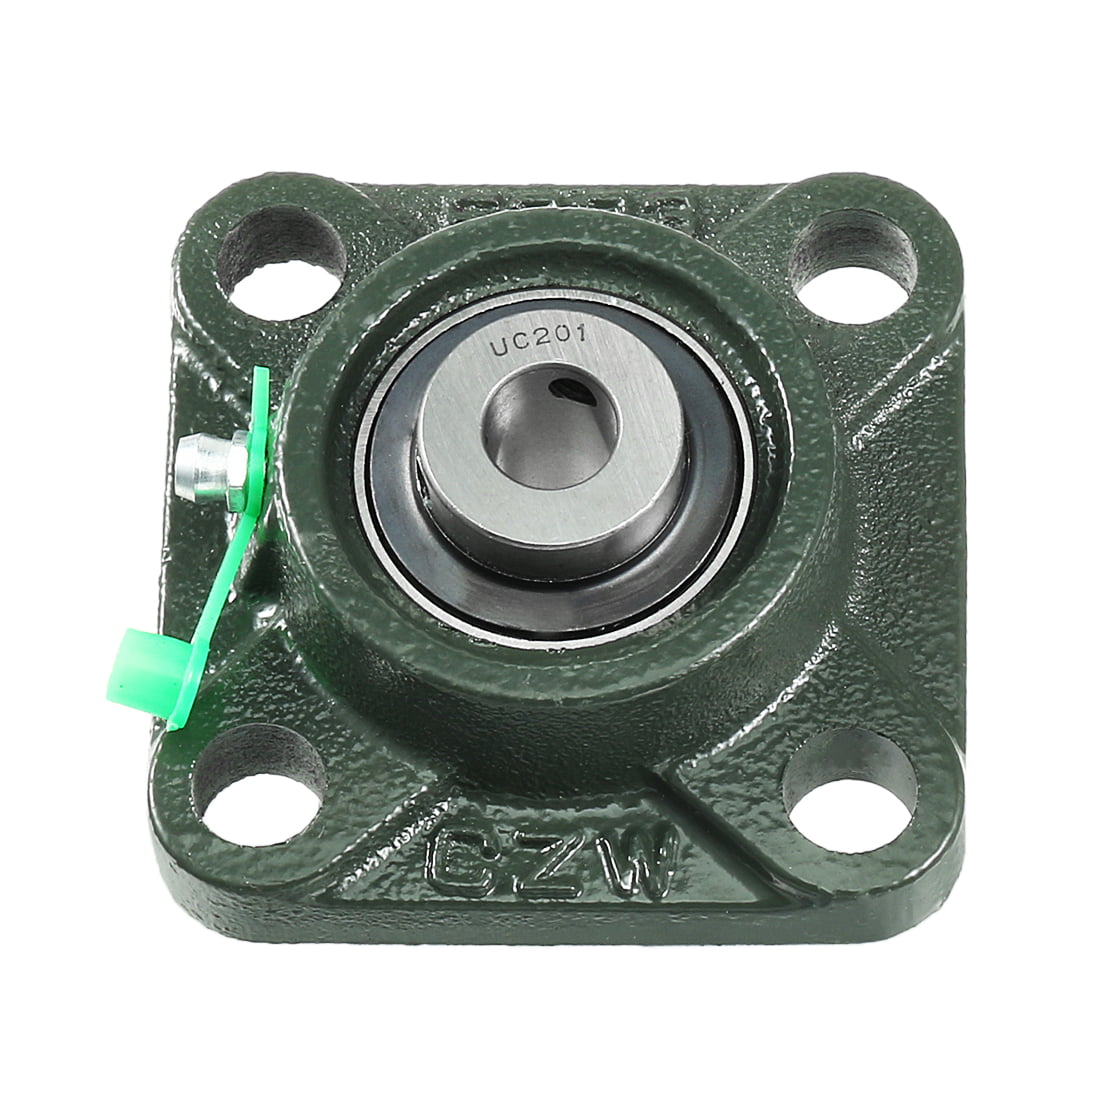 2 square flange bearings UCF201-8 Premium double seals ABEC3 1/2 bore UCF201 8 